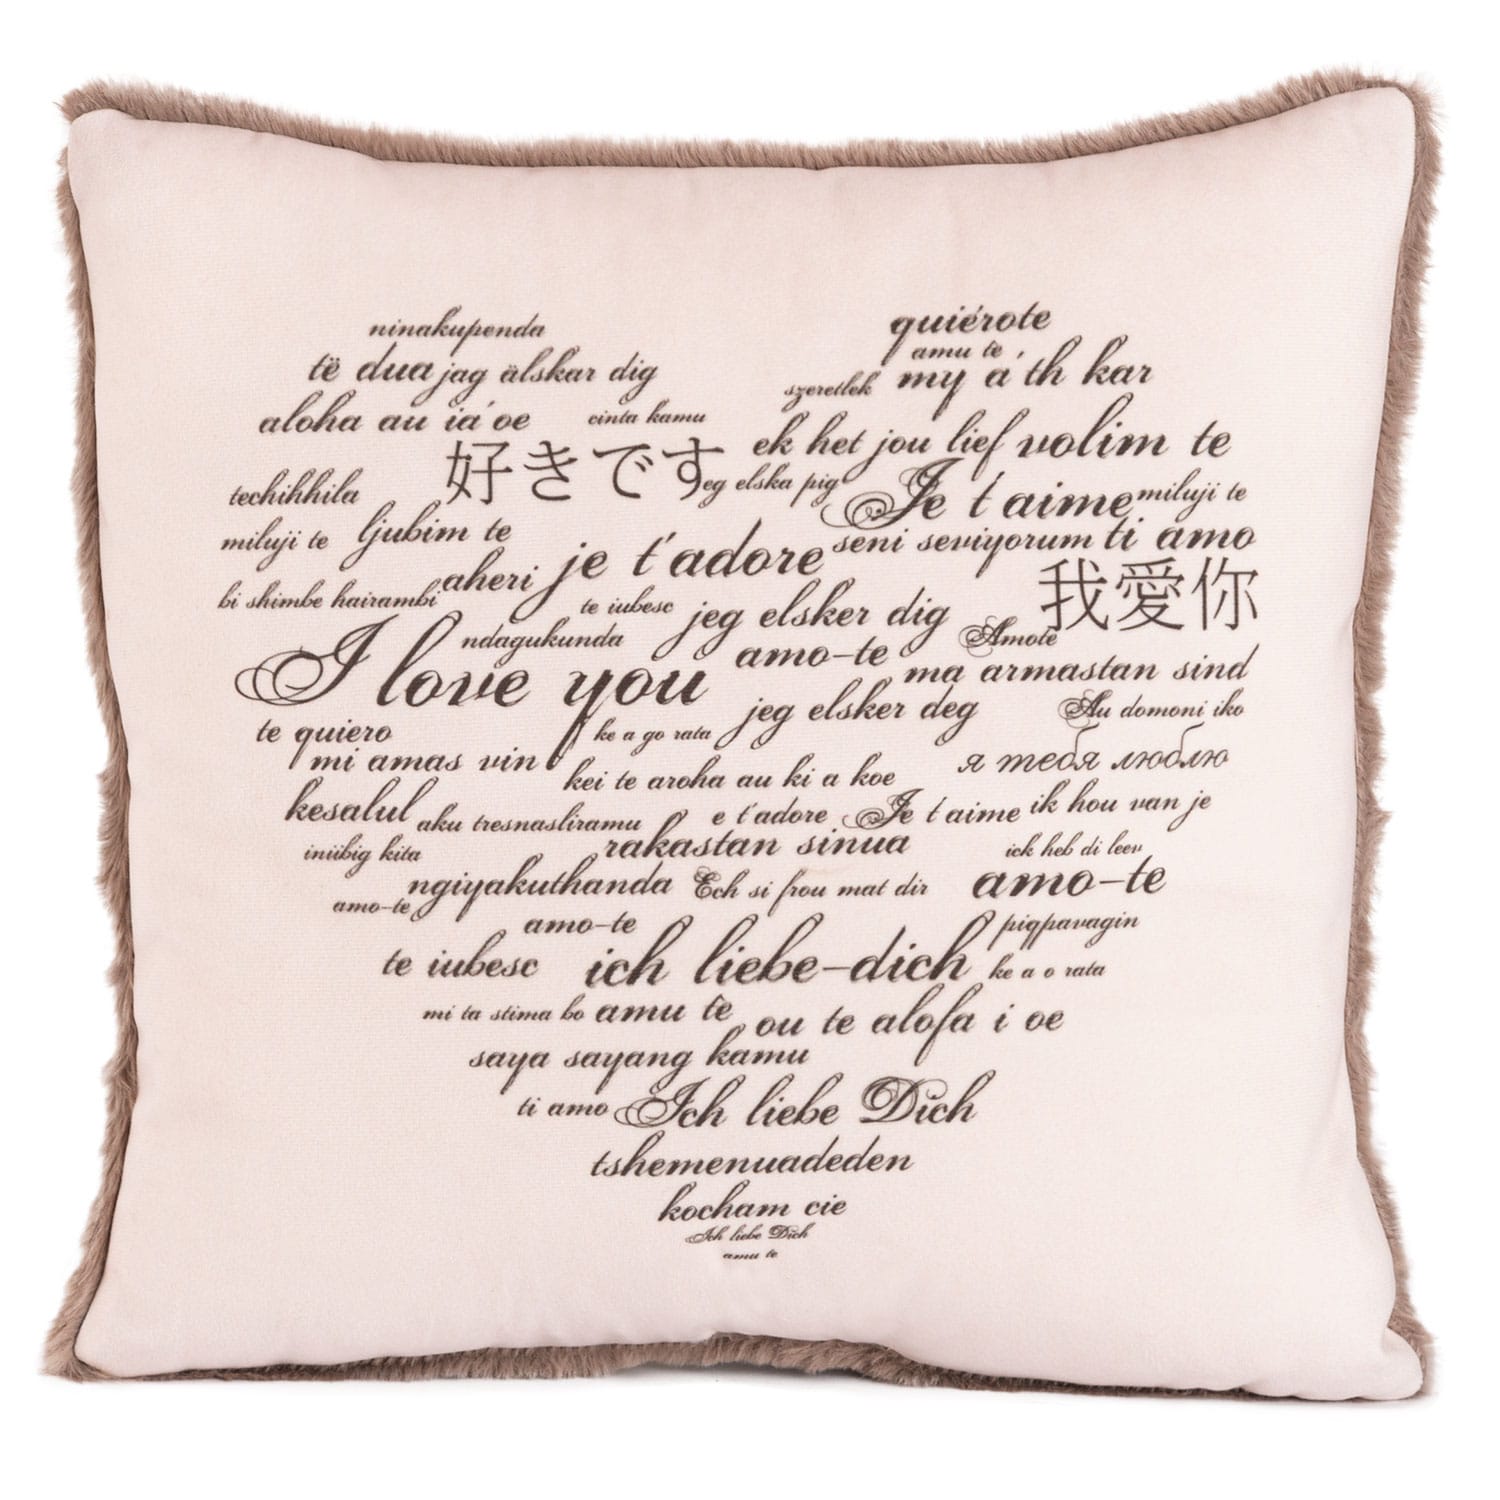 St. Valentine's pillow